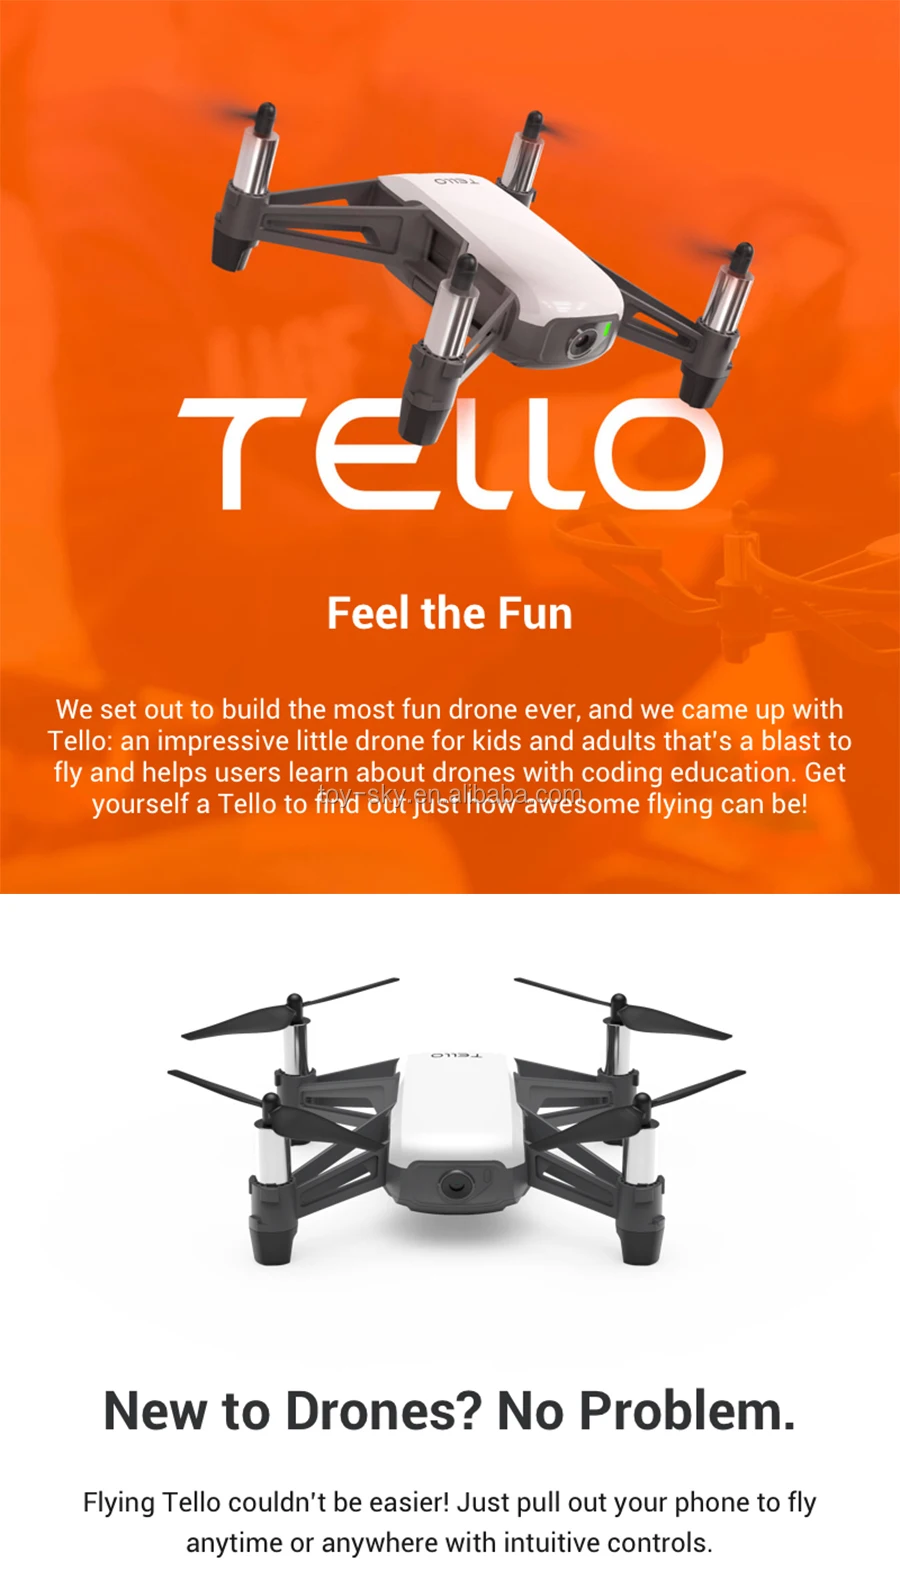 DJI Tello drone Perform flying stunts, shoot quick videos with EZ